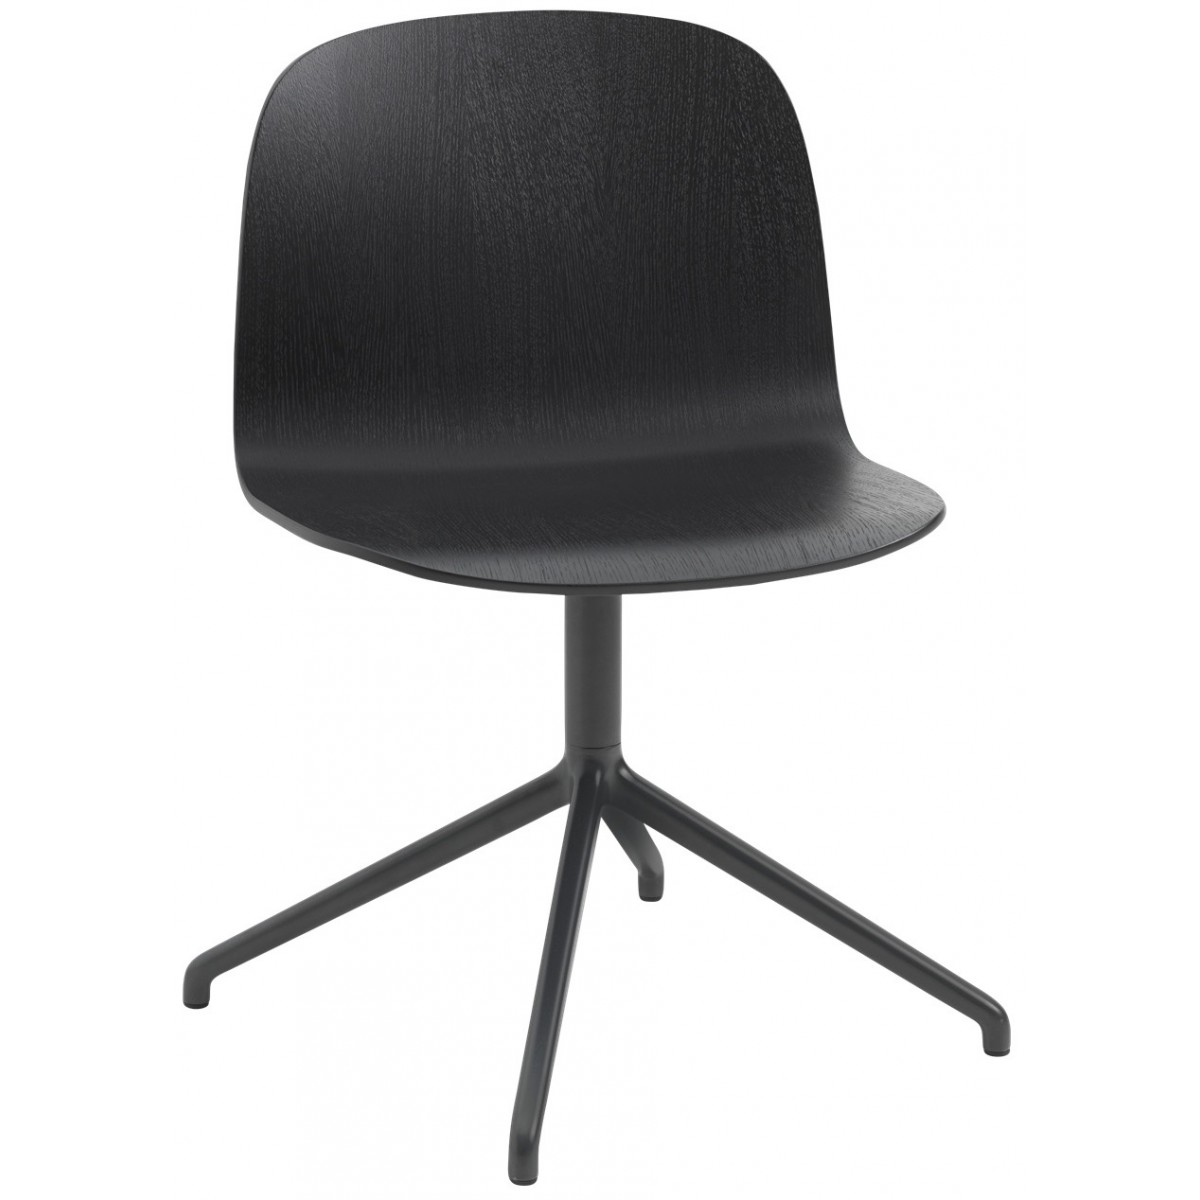 black, no castor - Visu Wide chair swivel base